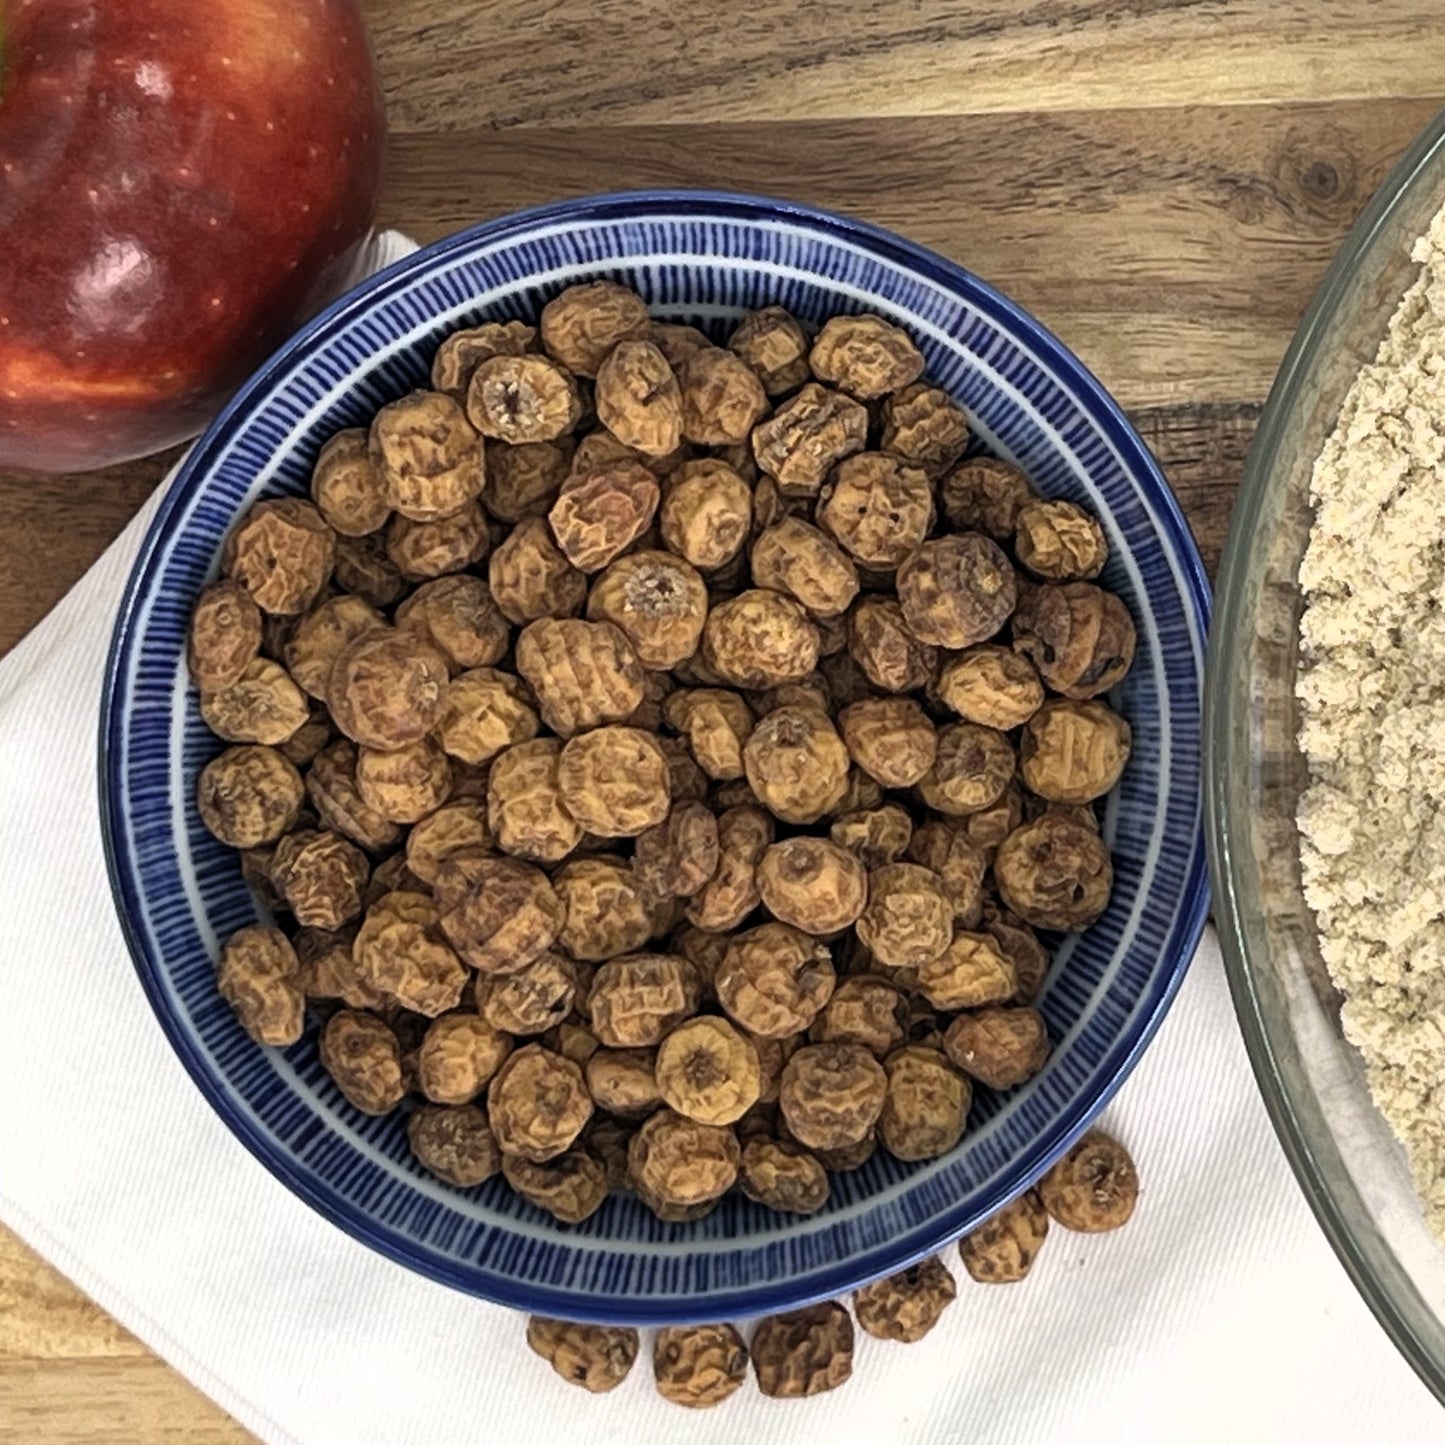 Raw Premium Organic Tiger Nuts in 12 oz bag